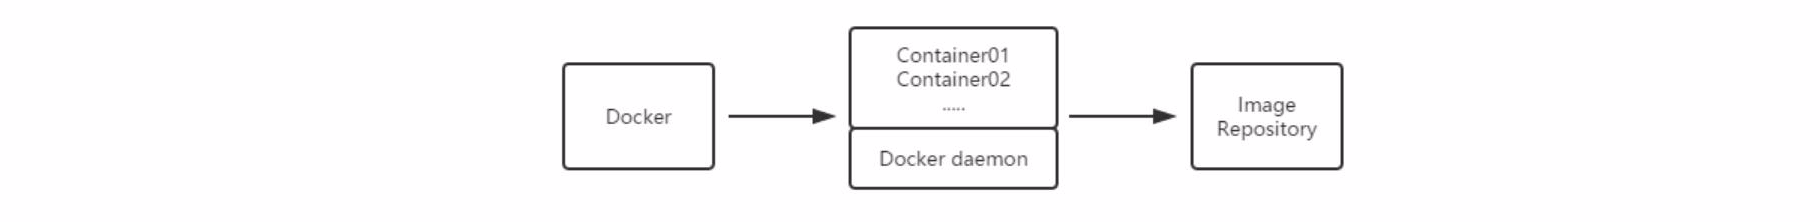 Docker架构与内部组件